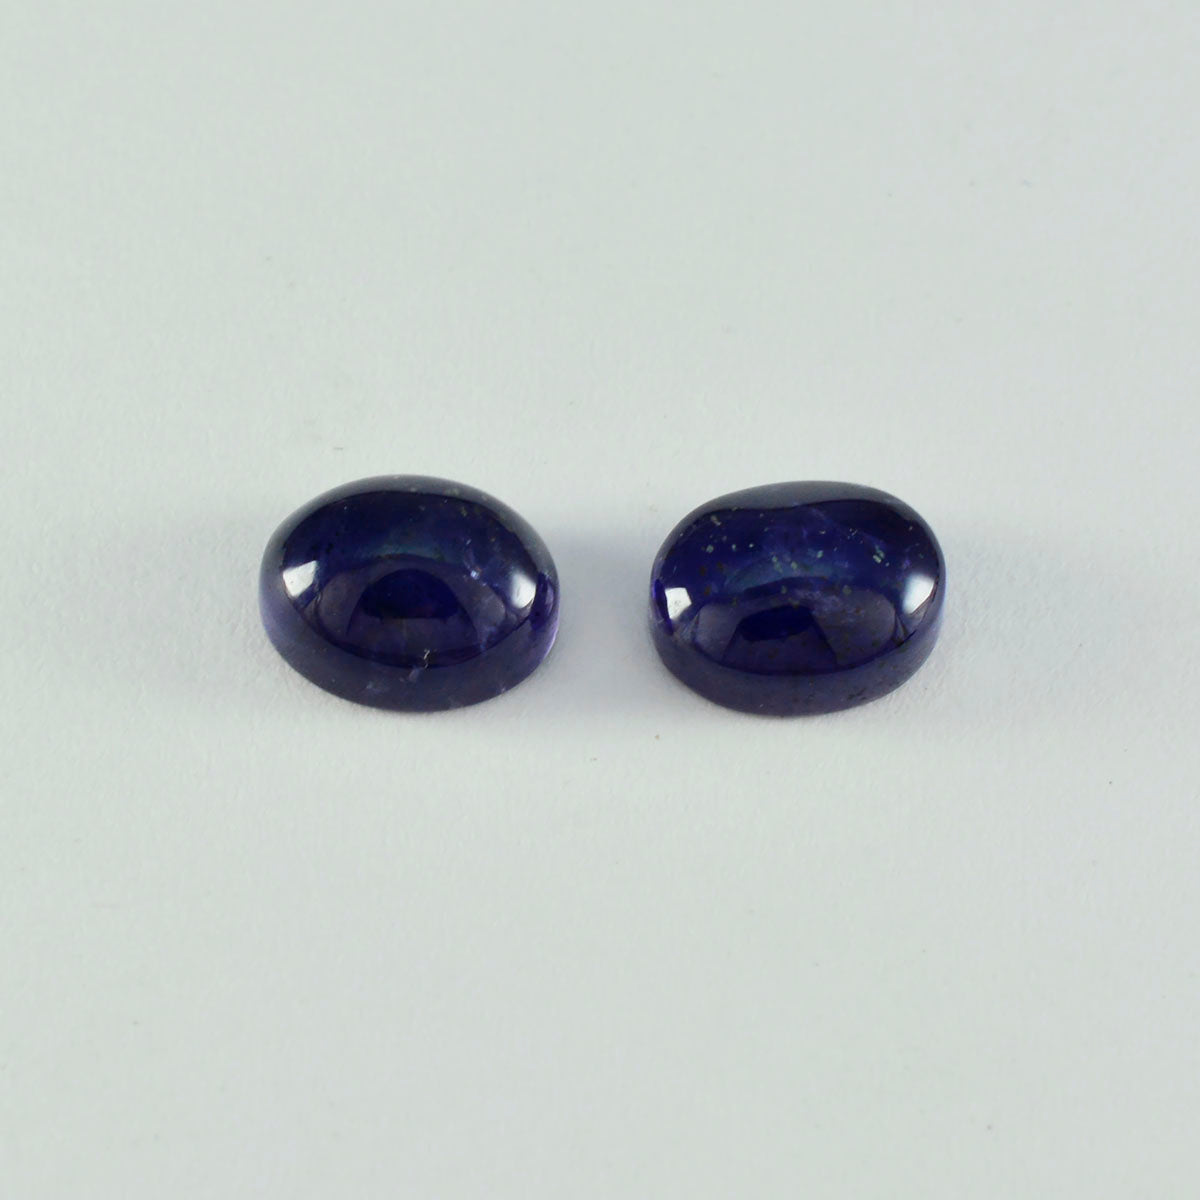 Riyogems 1PC Blue Iolite Cabochon 10x14 mm Oval Shape great Quality Loose Gemstone